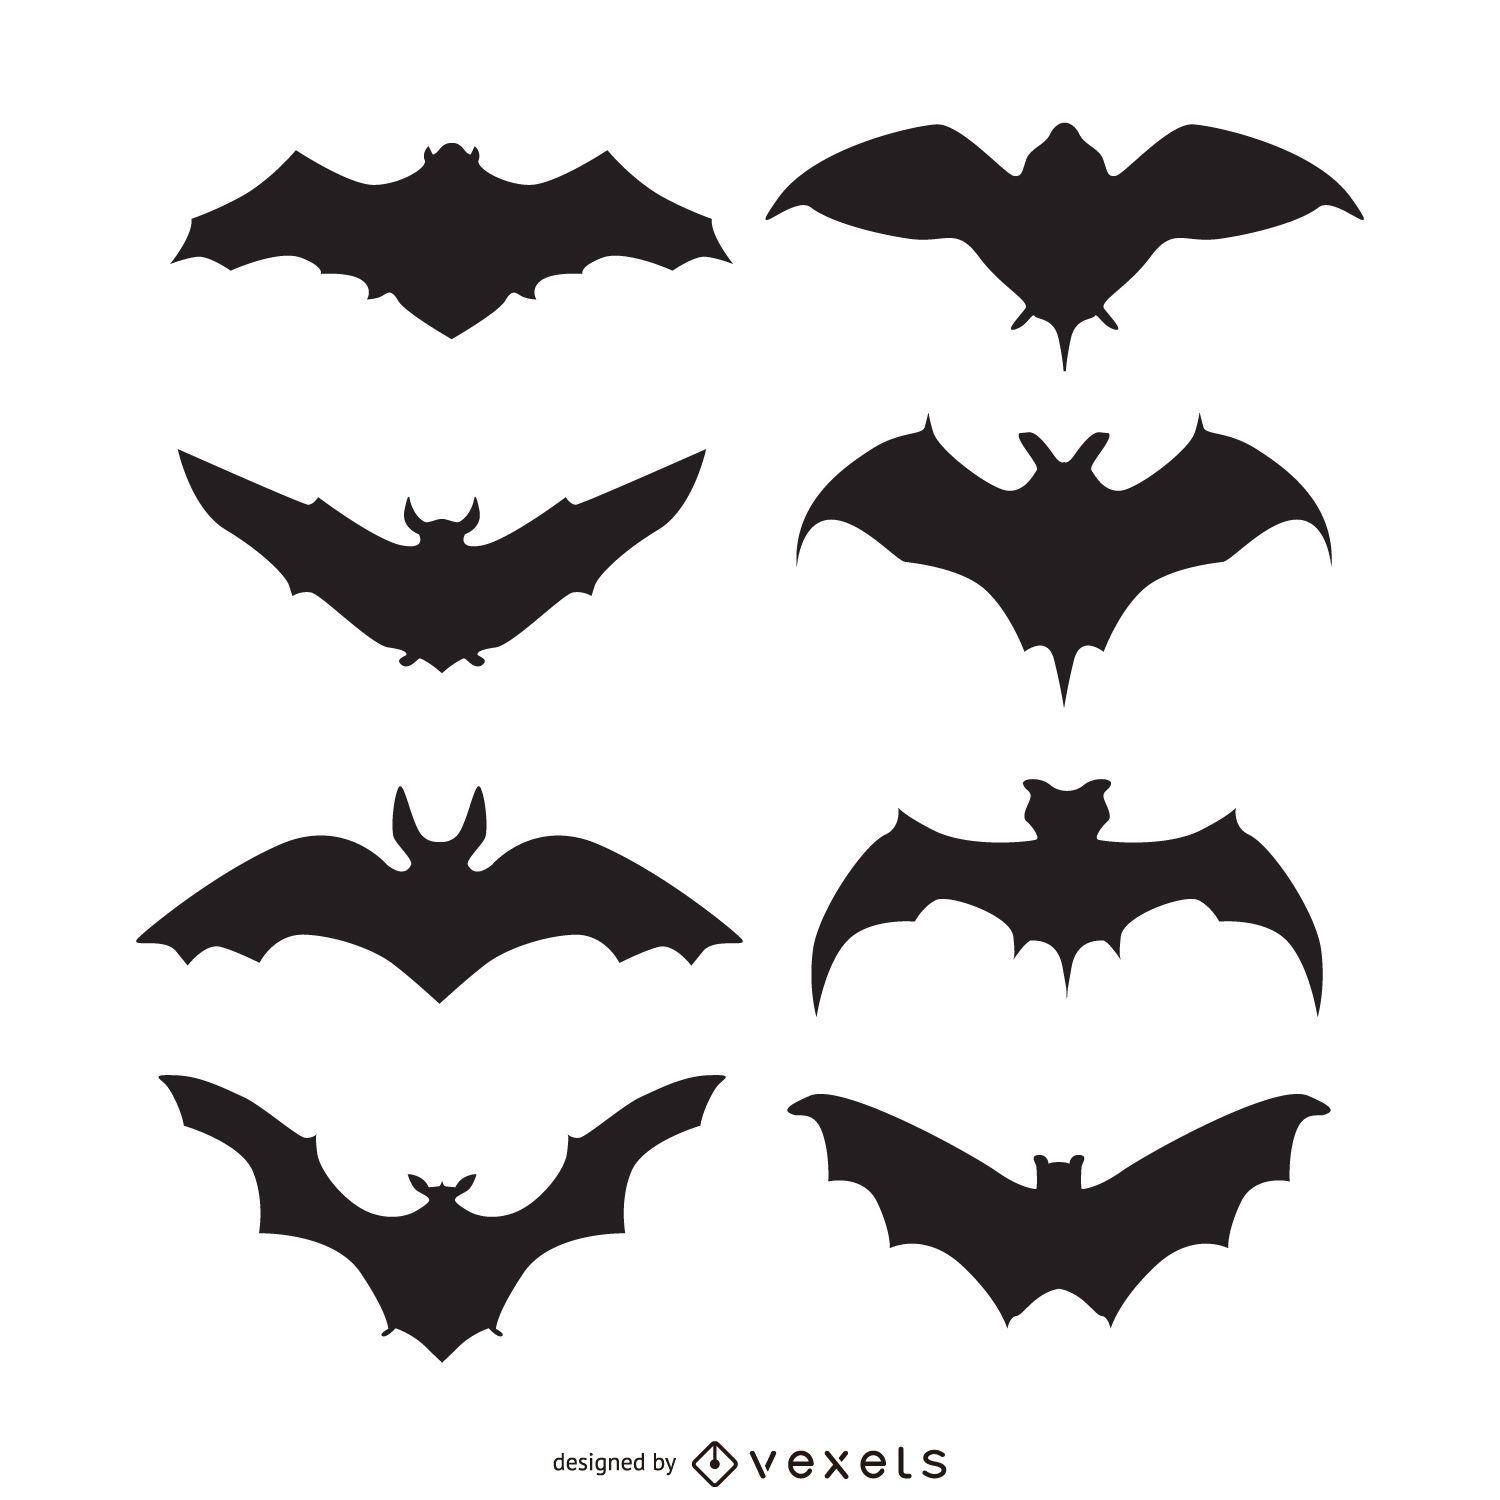 Bat silhouettes set